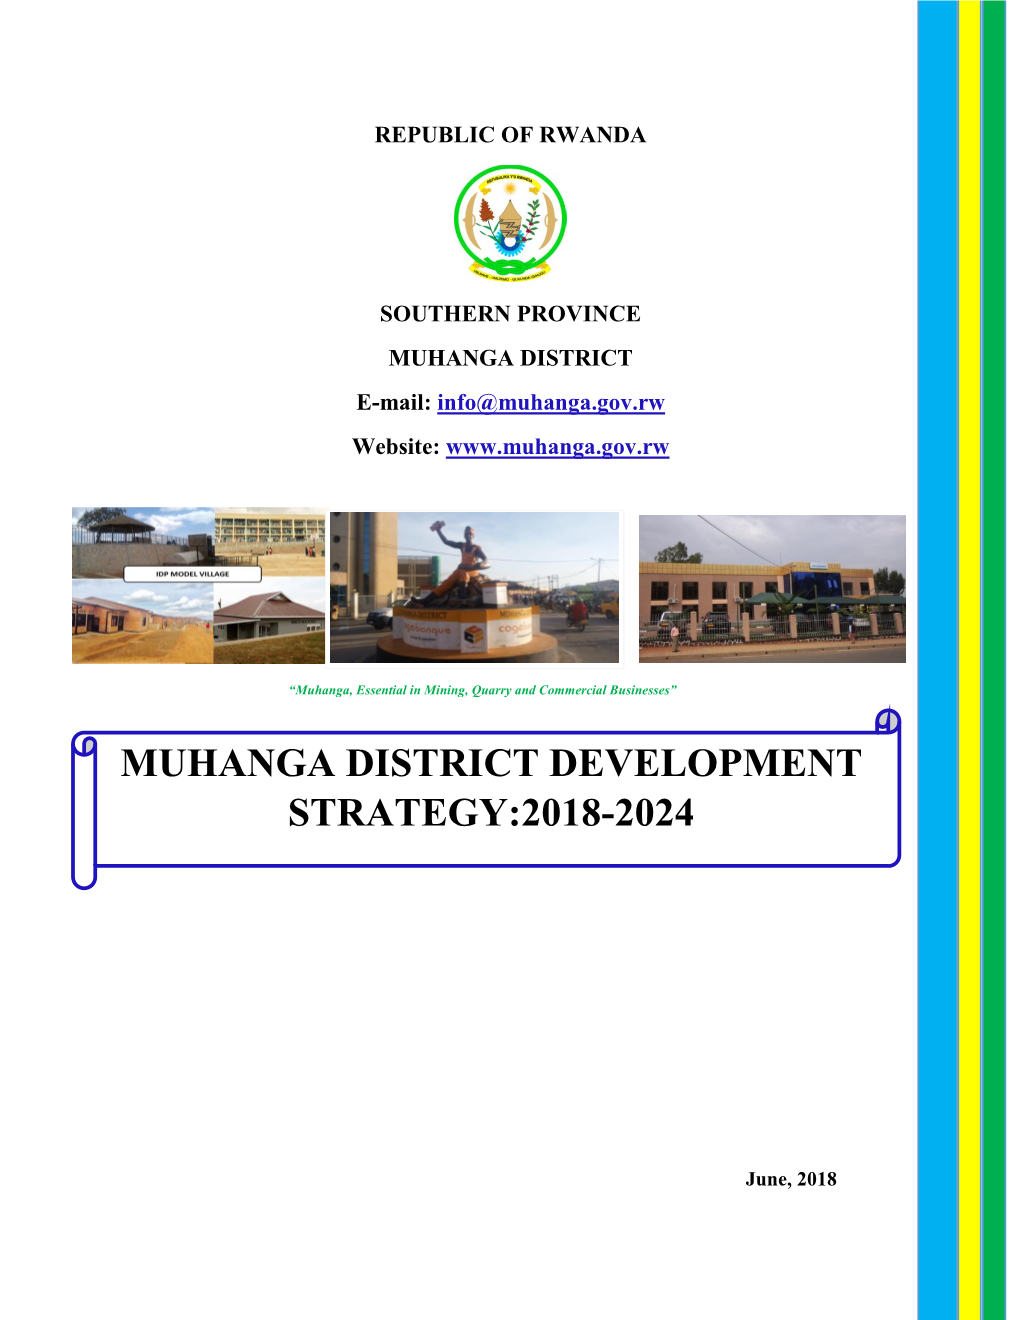 Muhanga District Development Strategy:2018